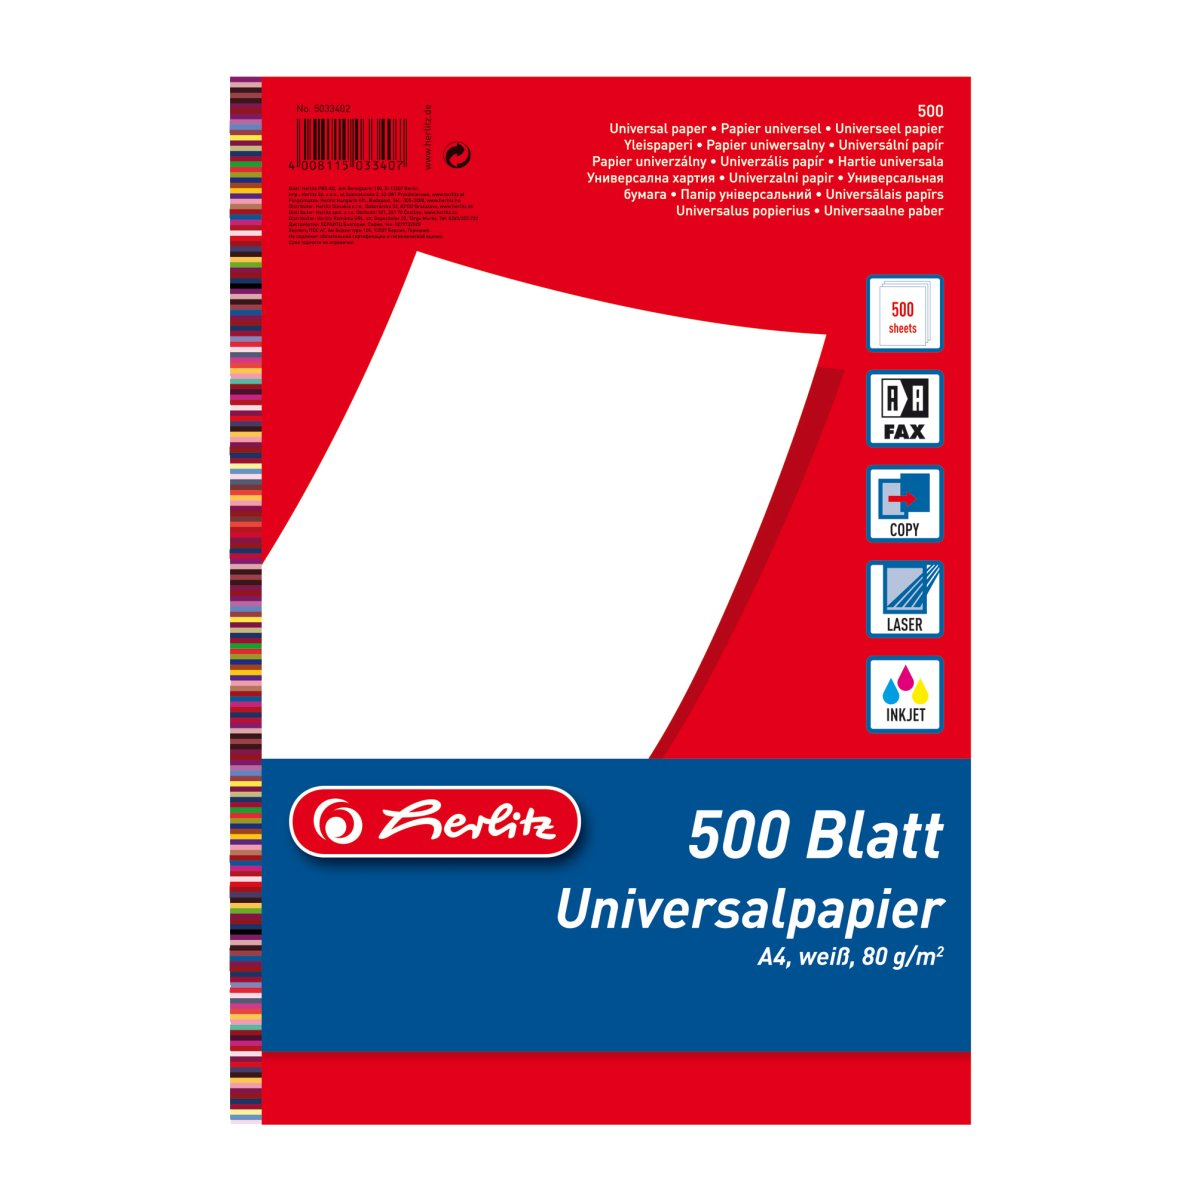 herlitz | Universalpapier A4 80g ws 500 Bl. f.Inkjet/Laser/Matrix/Copy/Fax